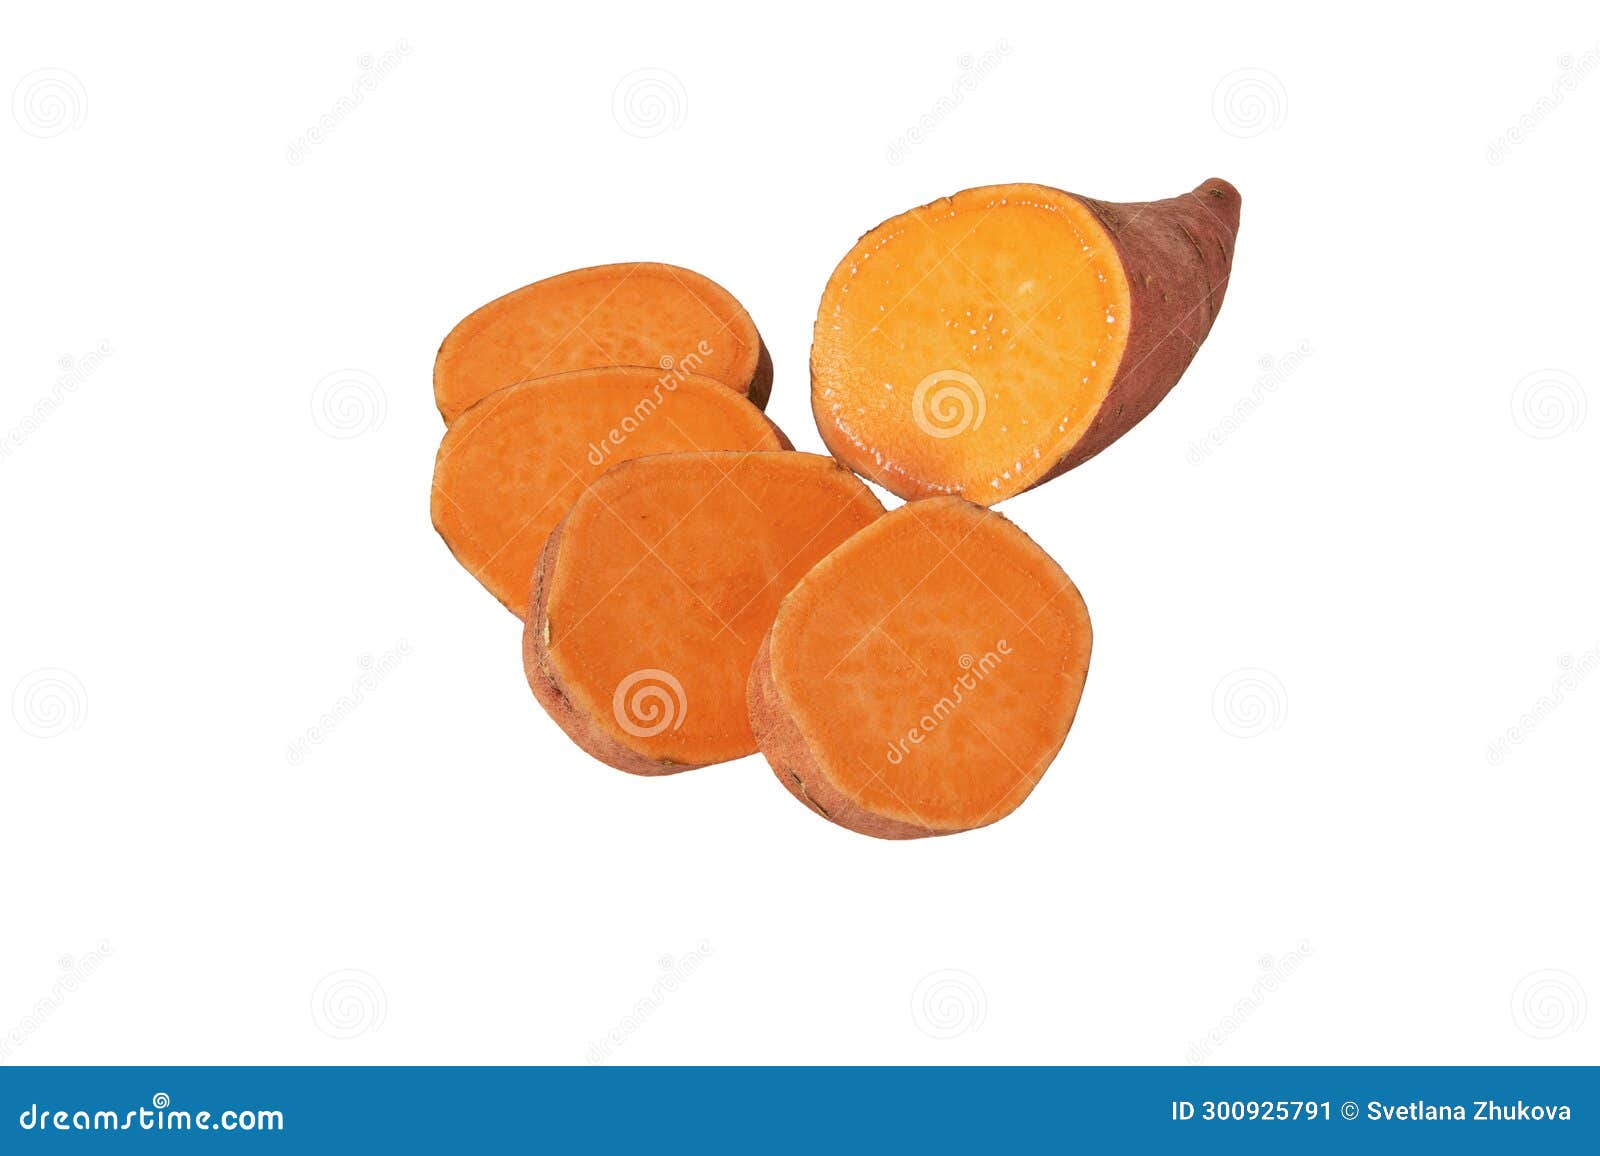 sweet potato or boniato sliced tube  on white. transparent png additional format